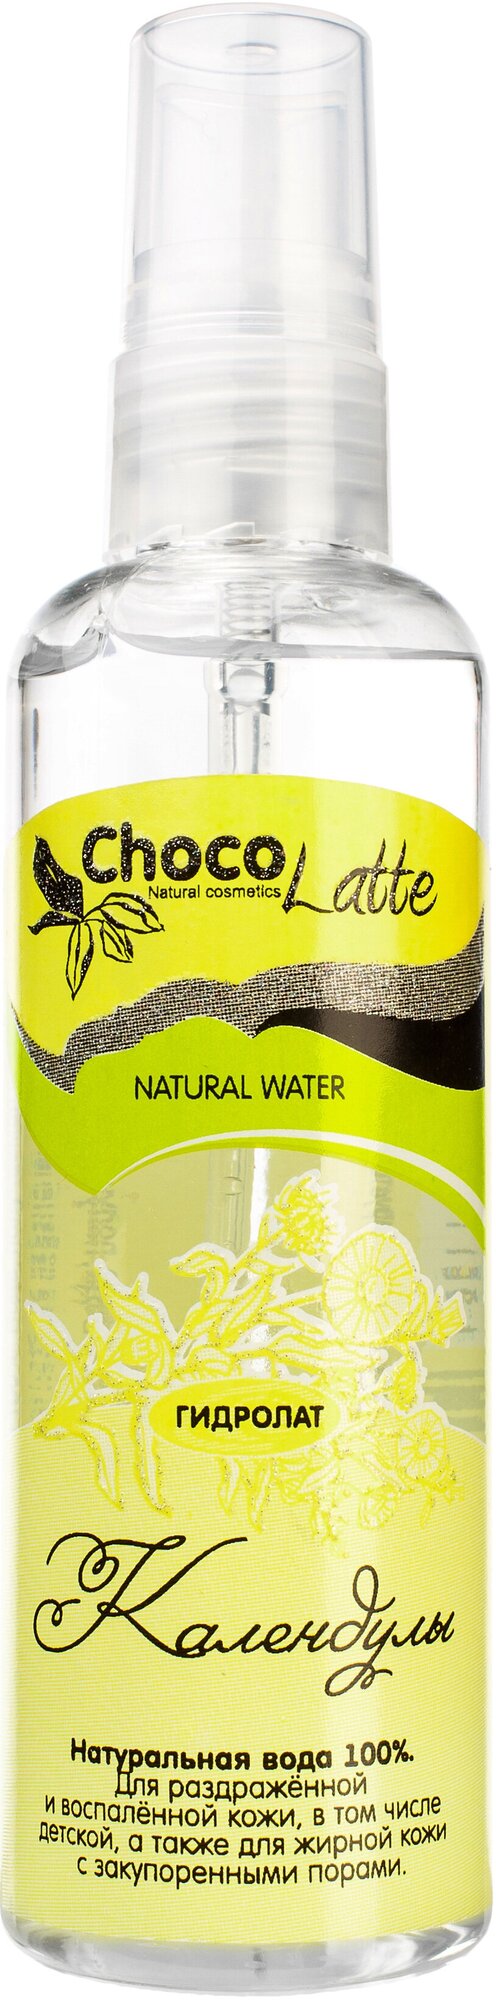 ChocoLatte Натуральная цветочная вода календулы 100% гидролат, 100ml